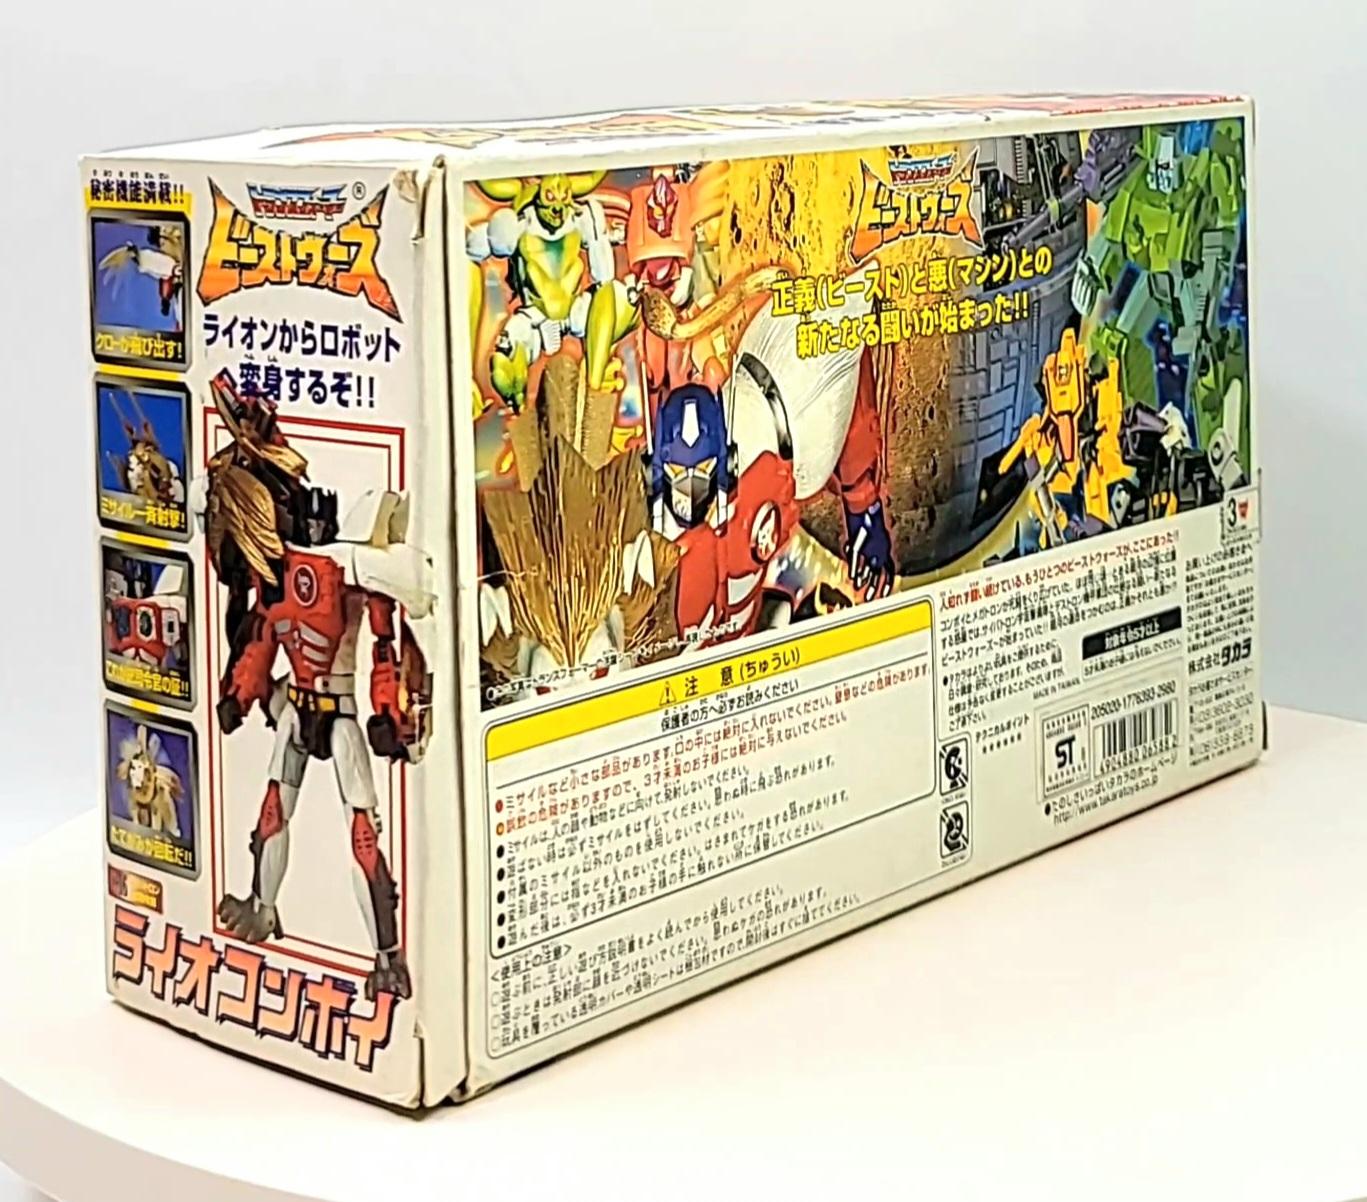 Transformers Beast Wars C16 Lioconvoy Japanese Figure BOX ONLY - NO FIGURE